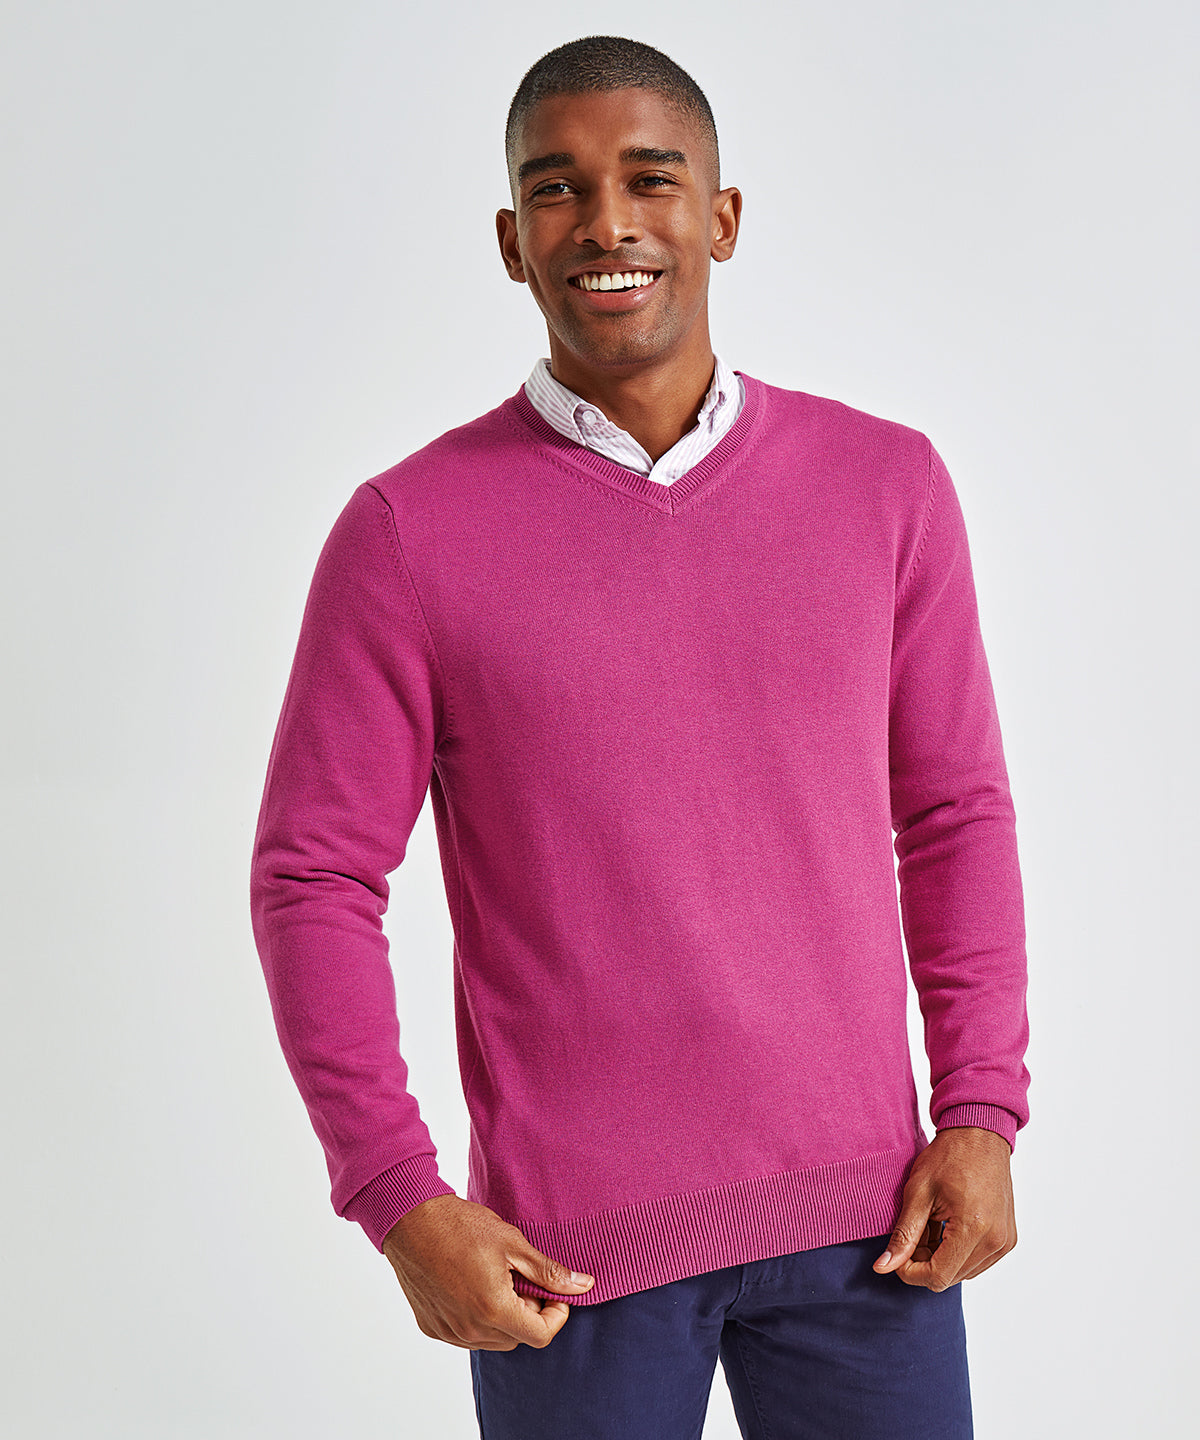 Asquith & Fox Men's Cotton Blend V-Neck Sweater